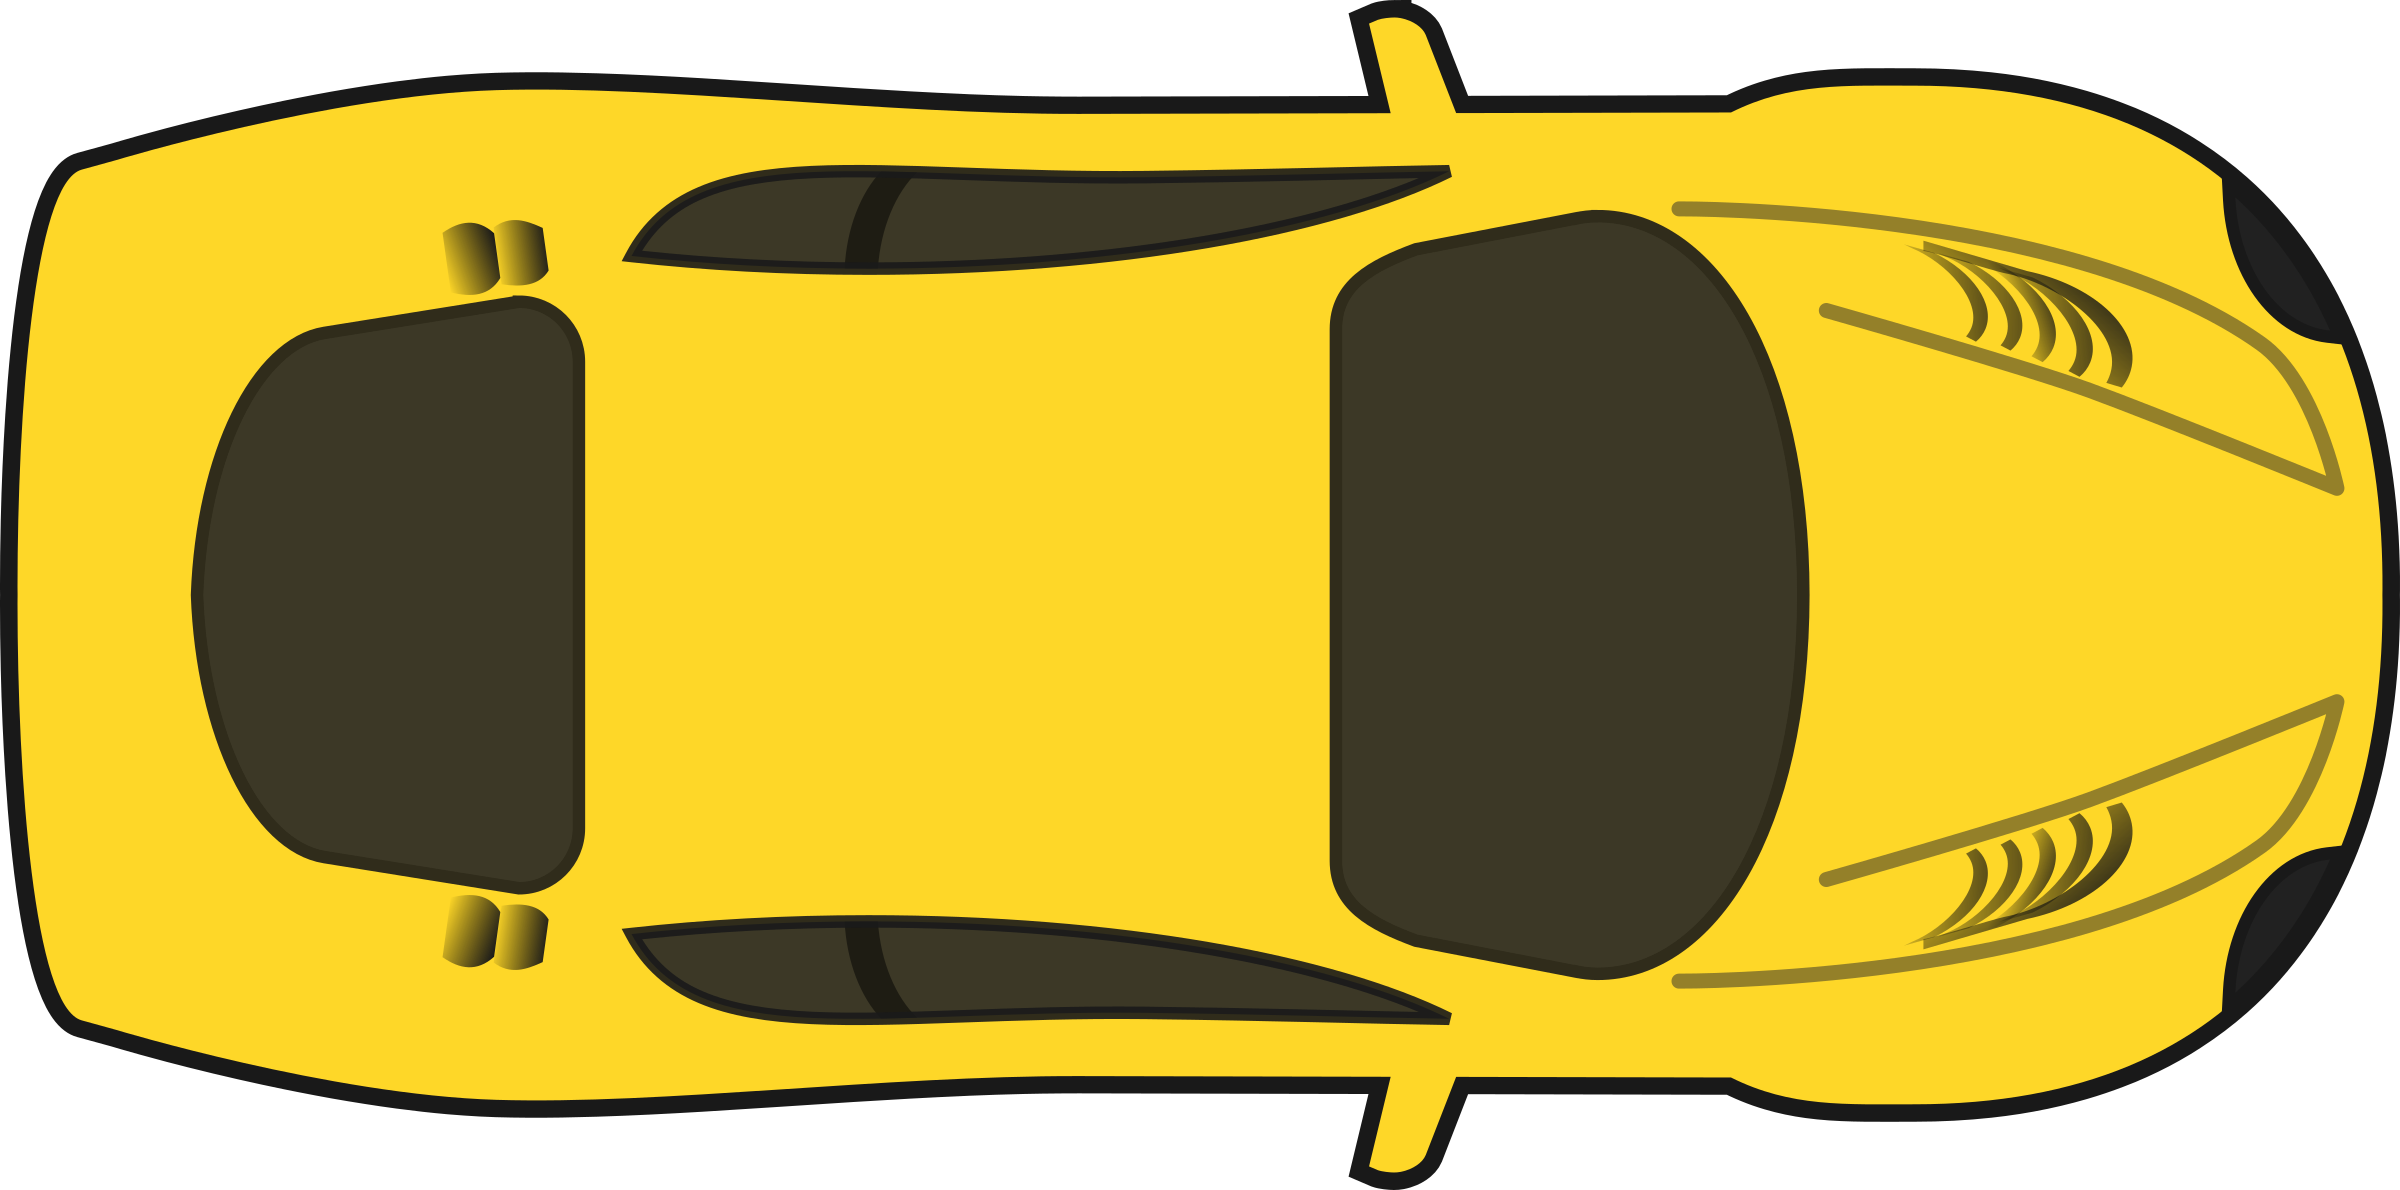 Yellow Racing Car (Top View) SVG Clip arts